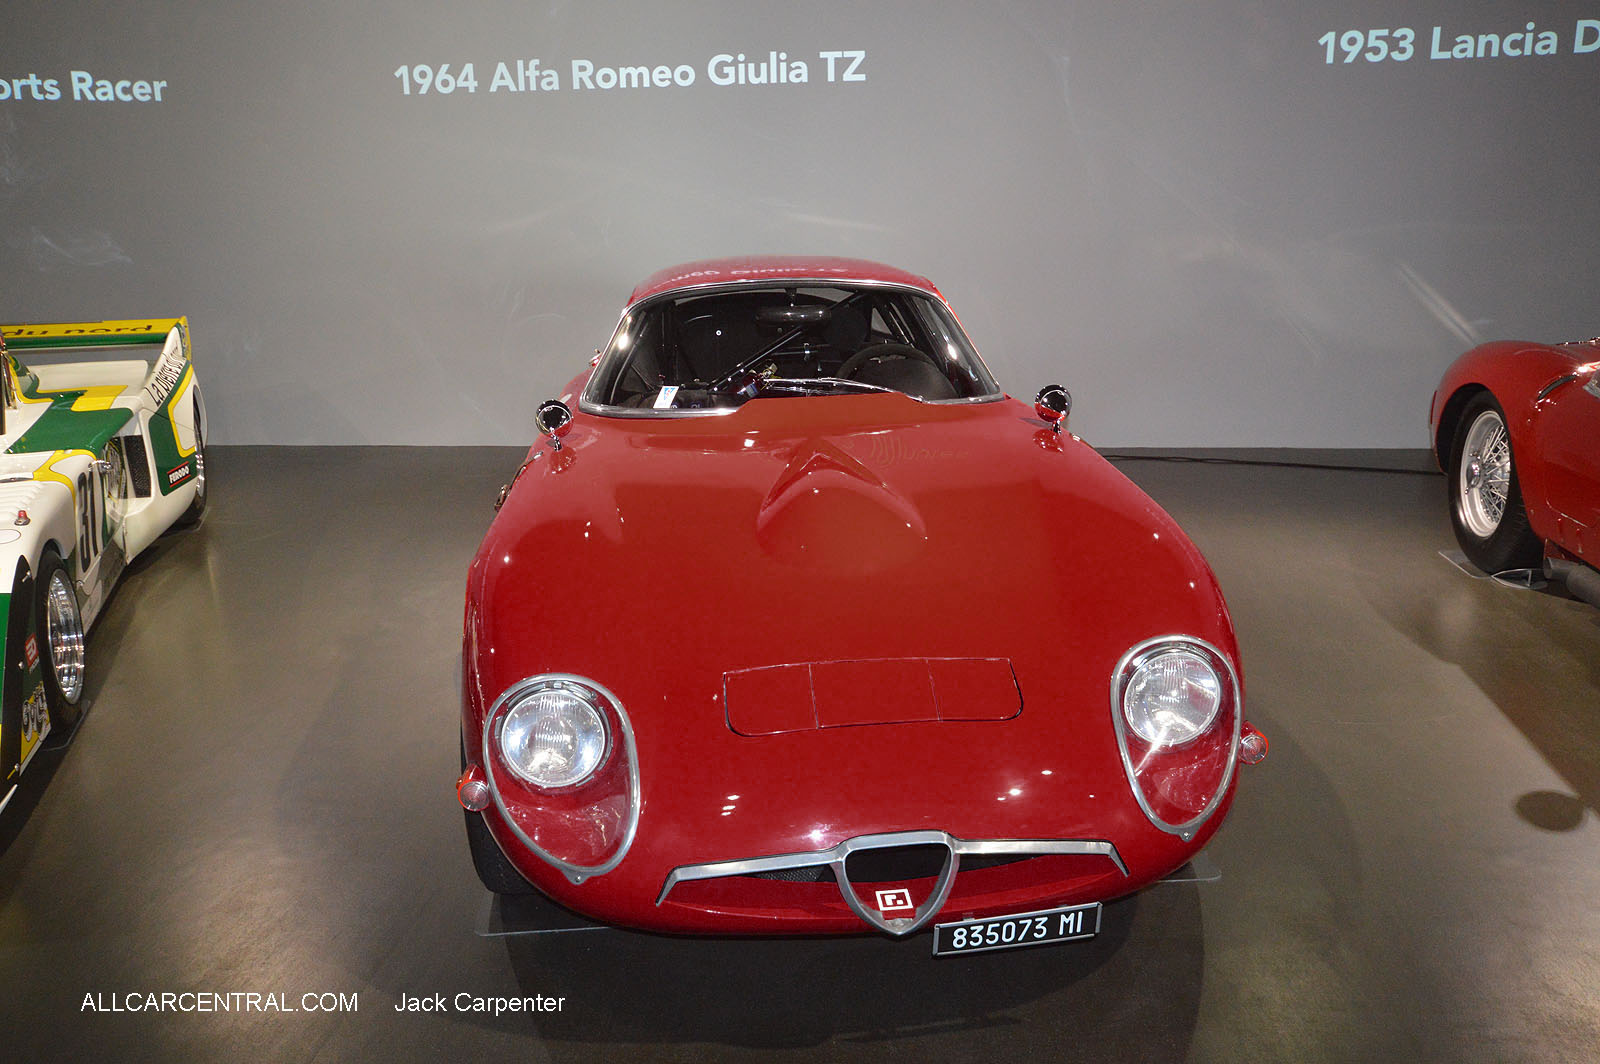   Alfa Romeo Giulia TZ 1964  Petersen Automotive Museum 
2016